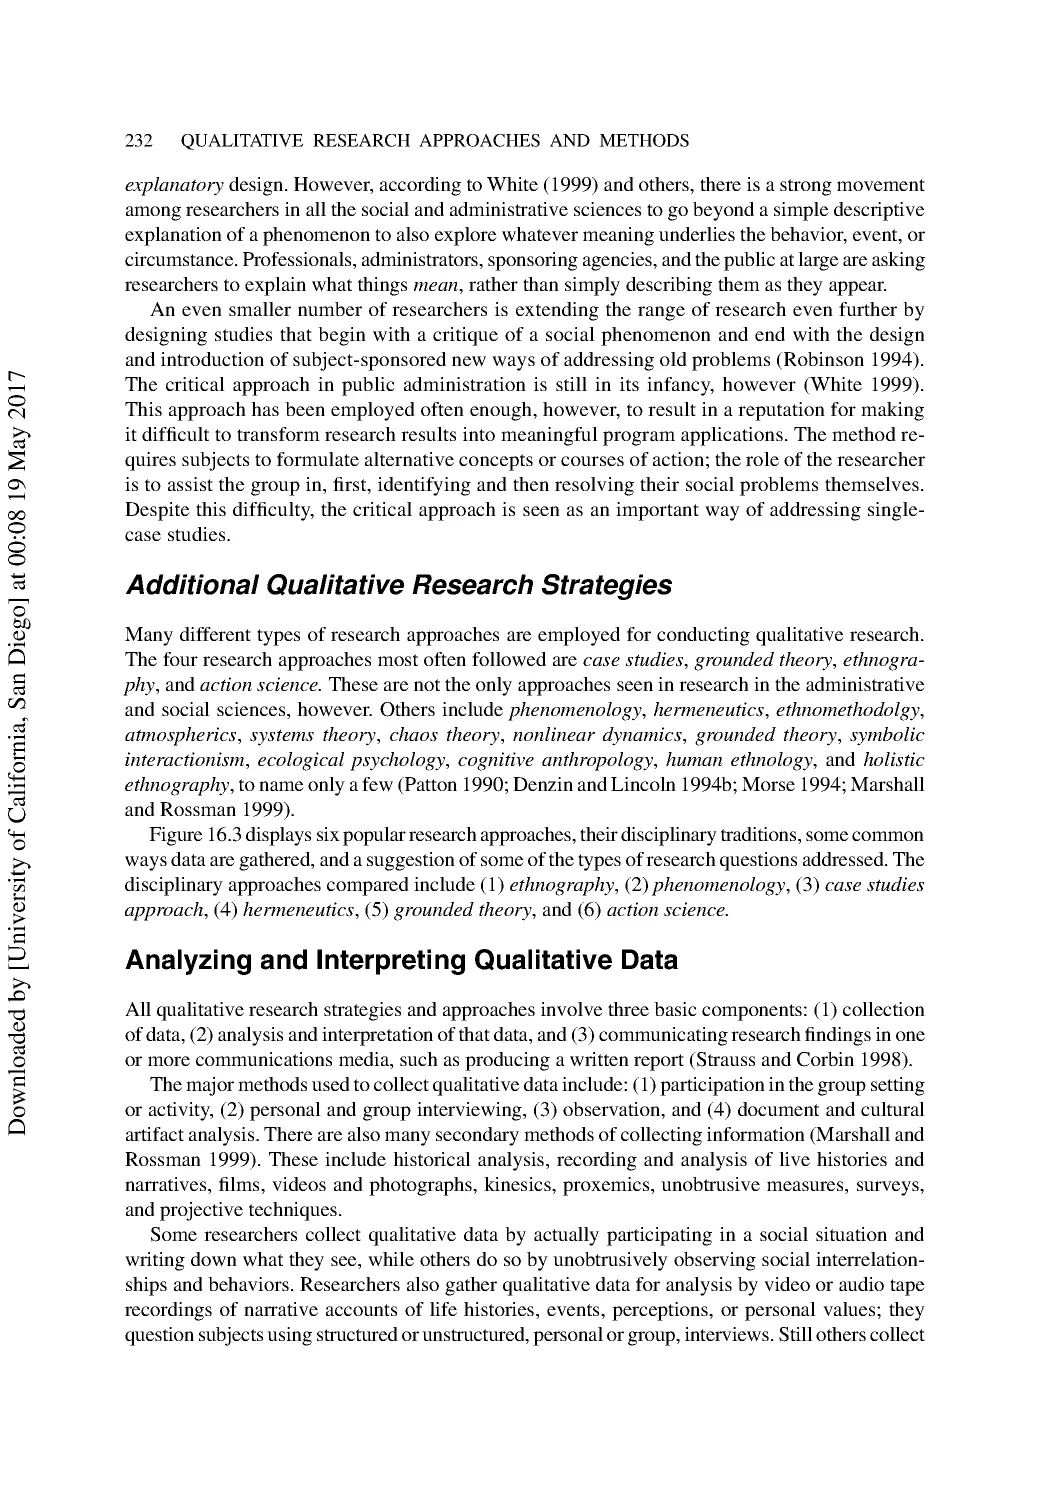 Analyzing and Interpreting Qualitative Data